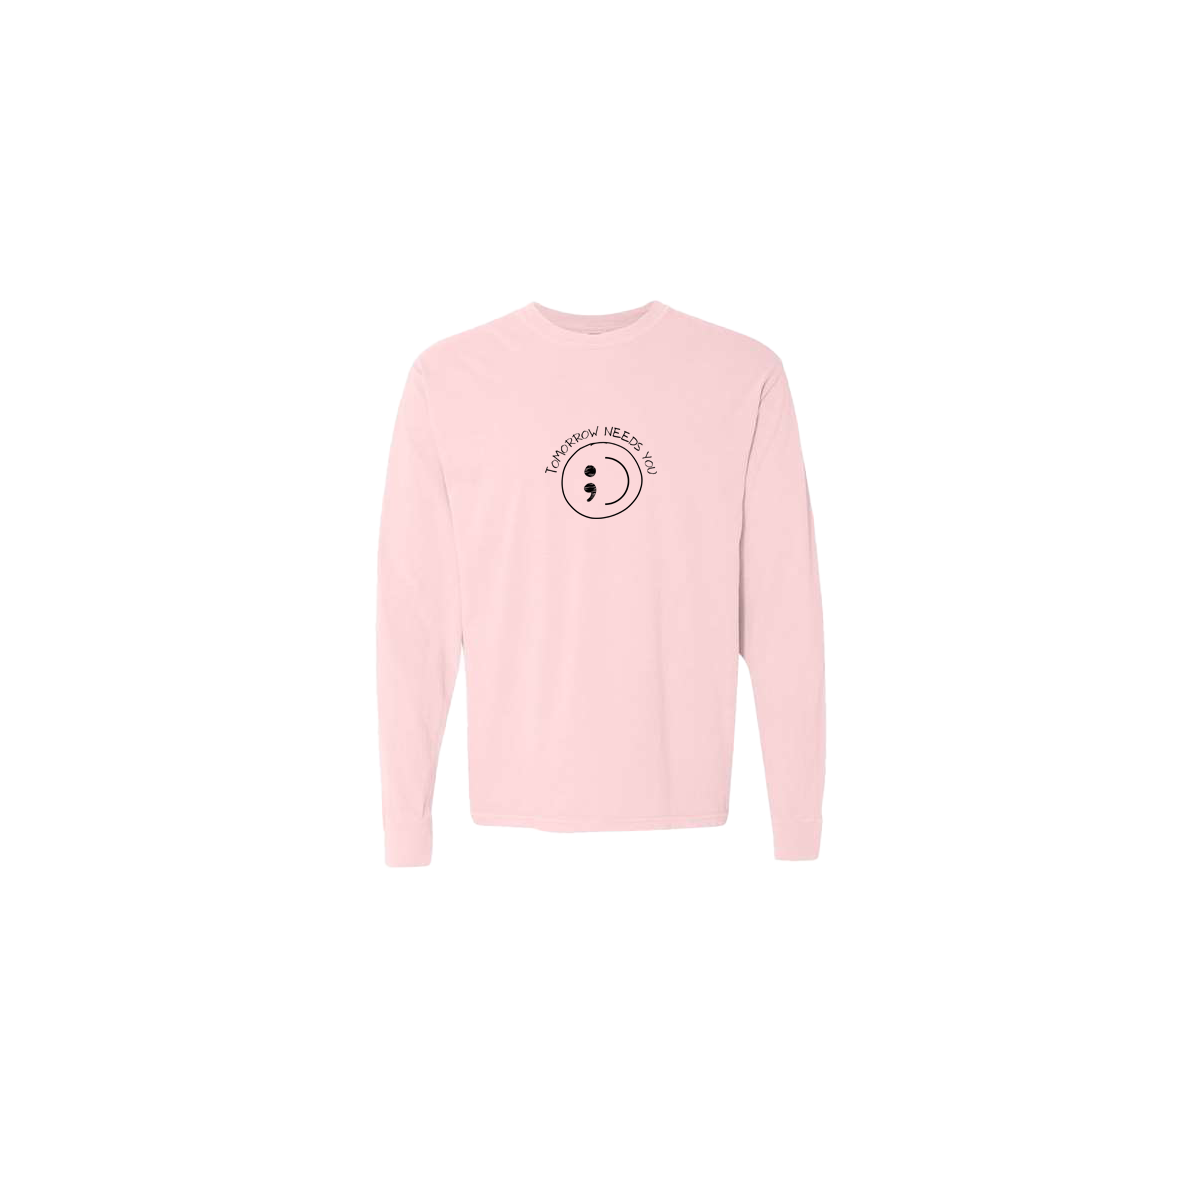 Tomorrow Needs You Embroidered Pink Long Sleeve Tshirt - Mental Health Awareness Clothing